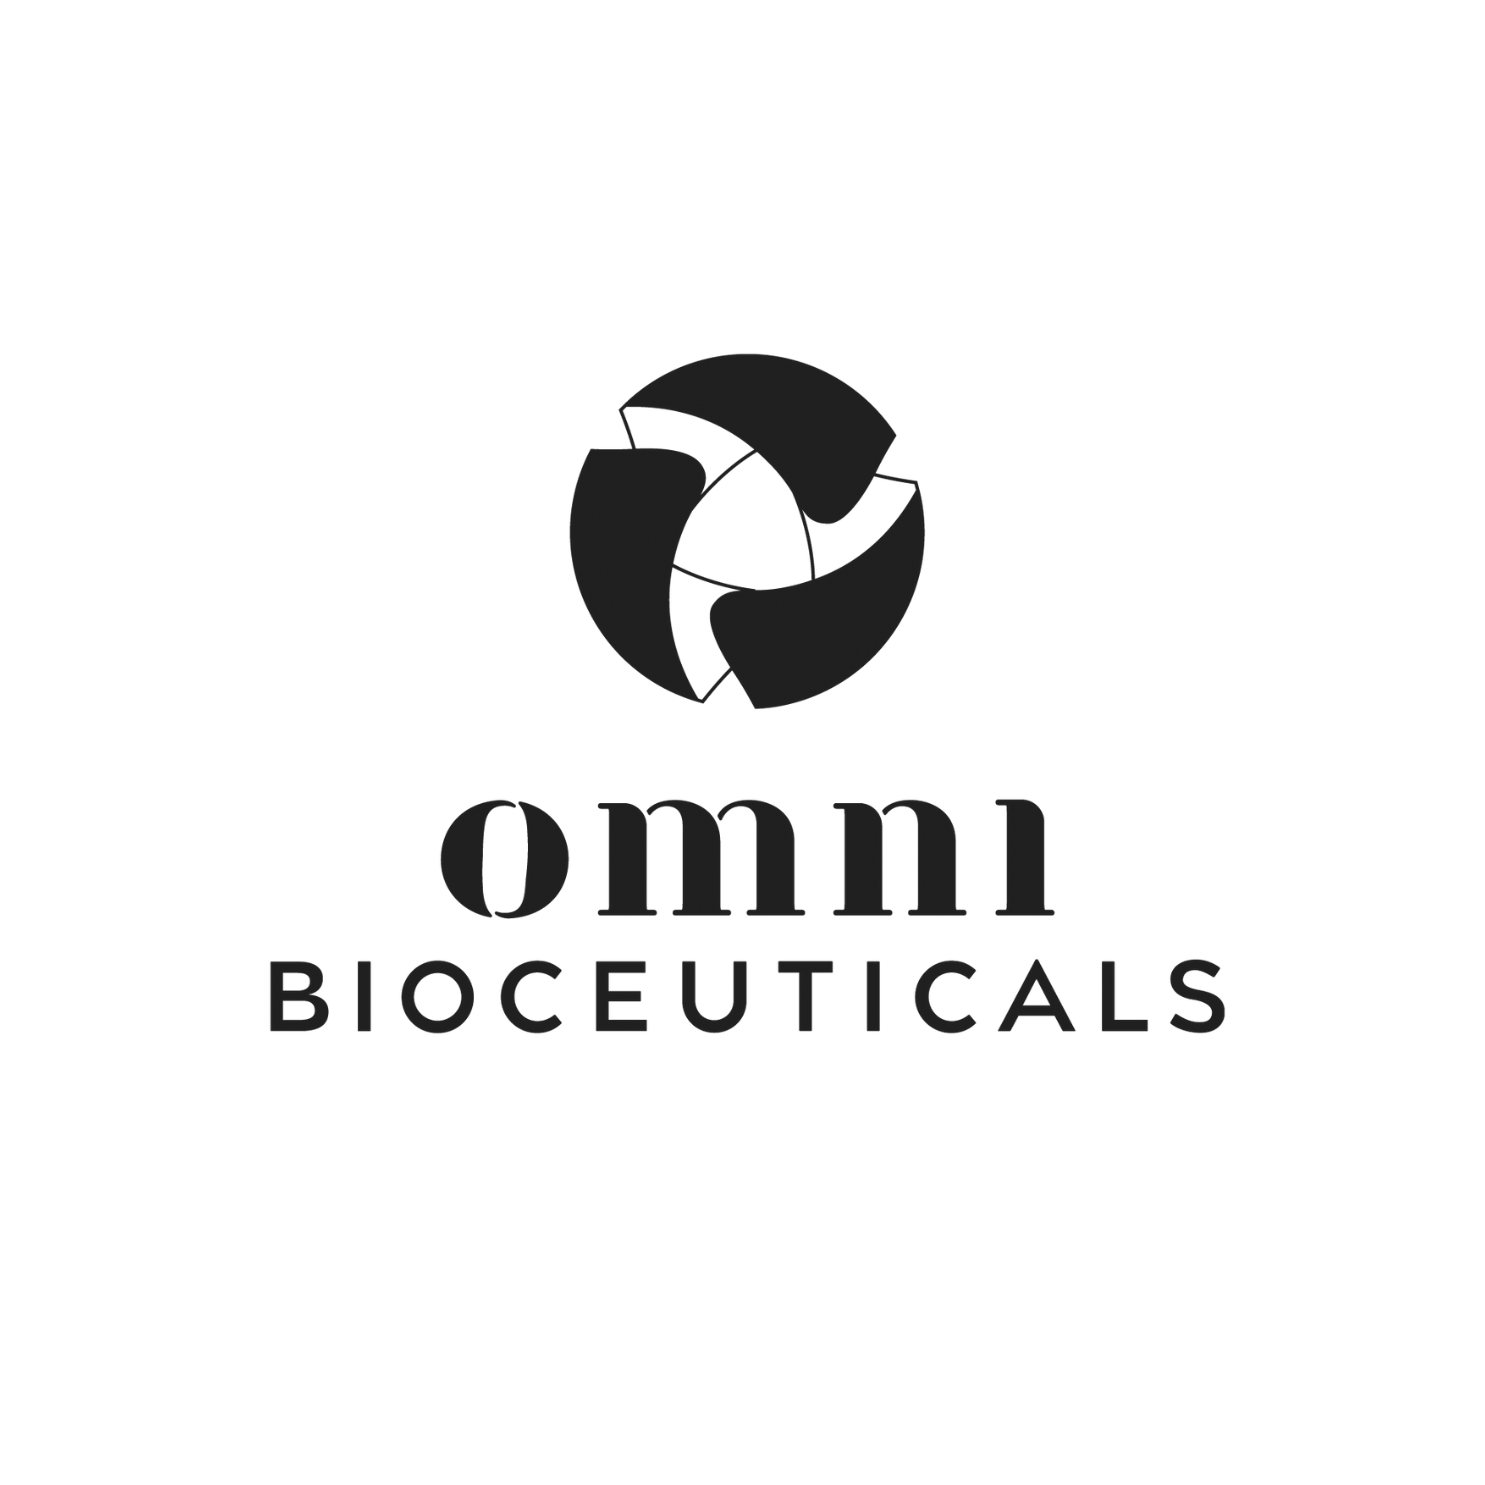 Omni Bioceuticals